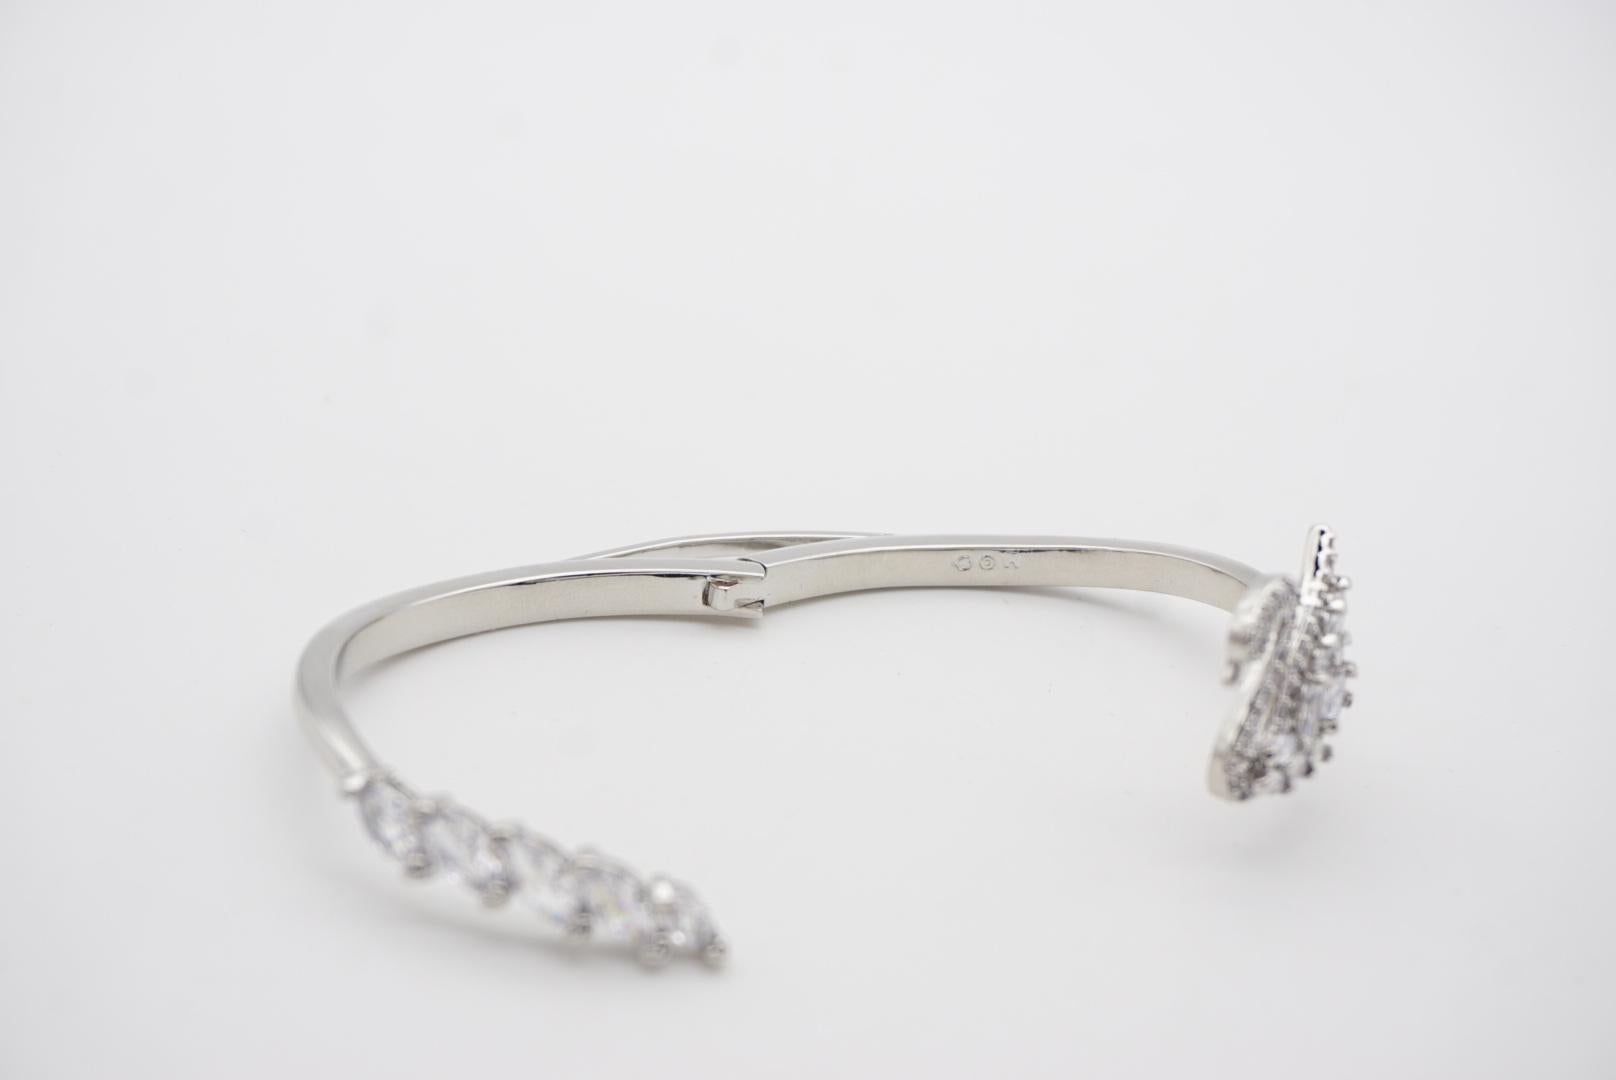 SWAROVSKI Swan Lake Sparkling Crystals Silver Rhodium Bangle Bracelet, M, BNWT For Sale 1